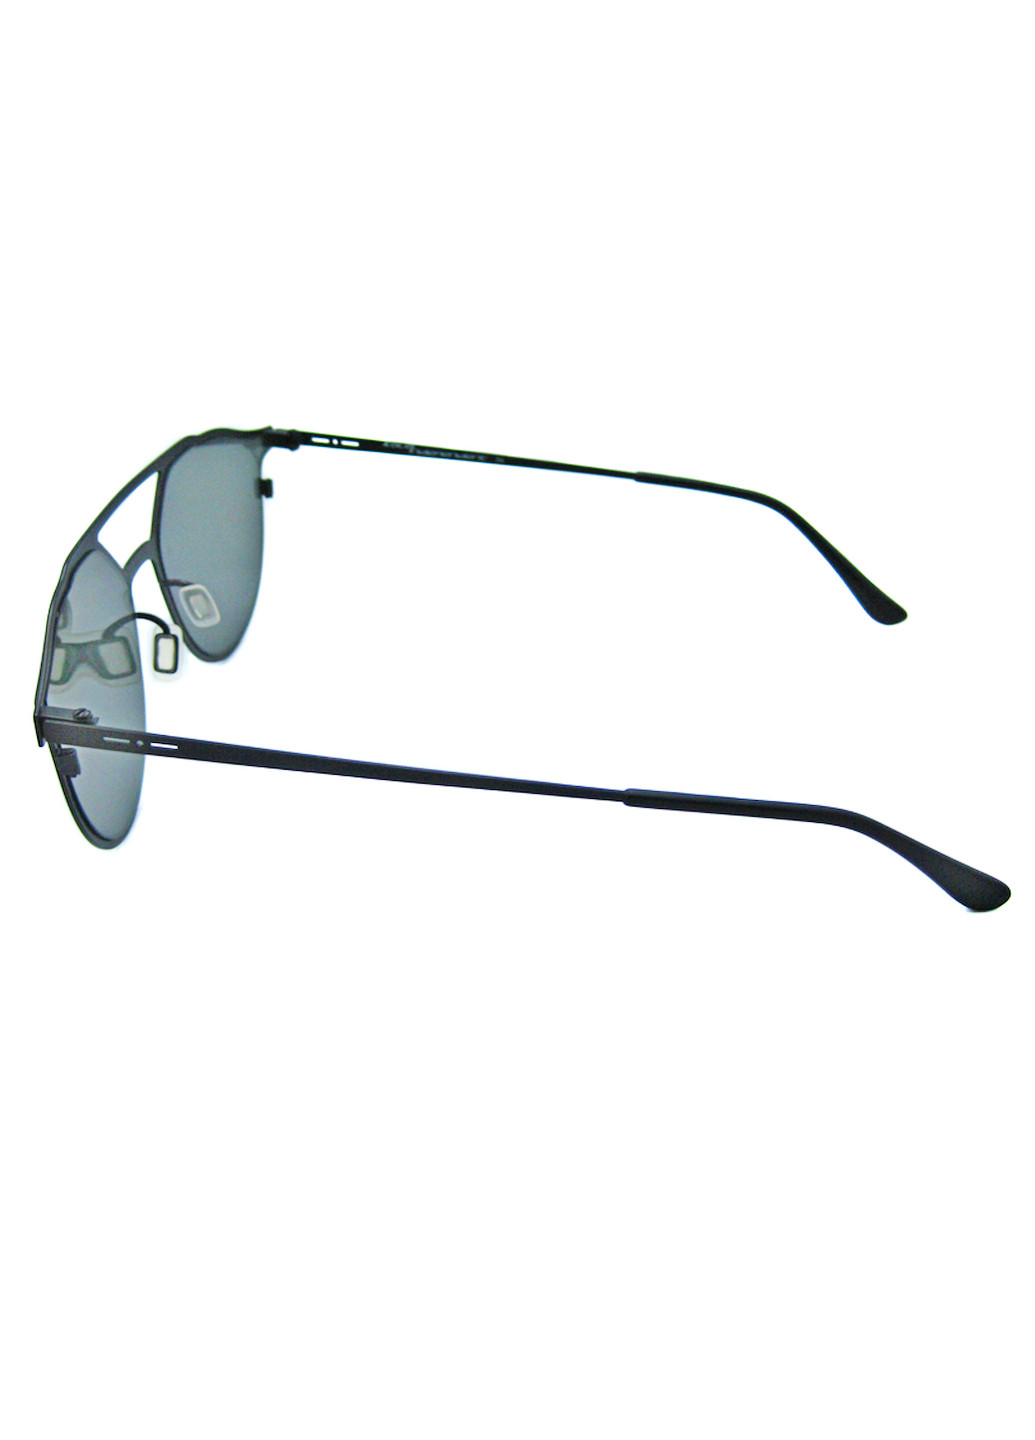 Солнцезащитные очки Italia Independent ii0256.009.000 (260821507)